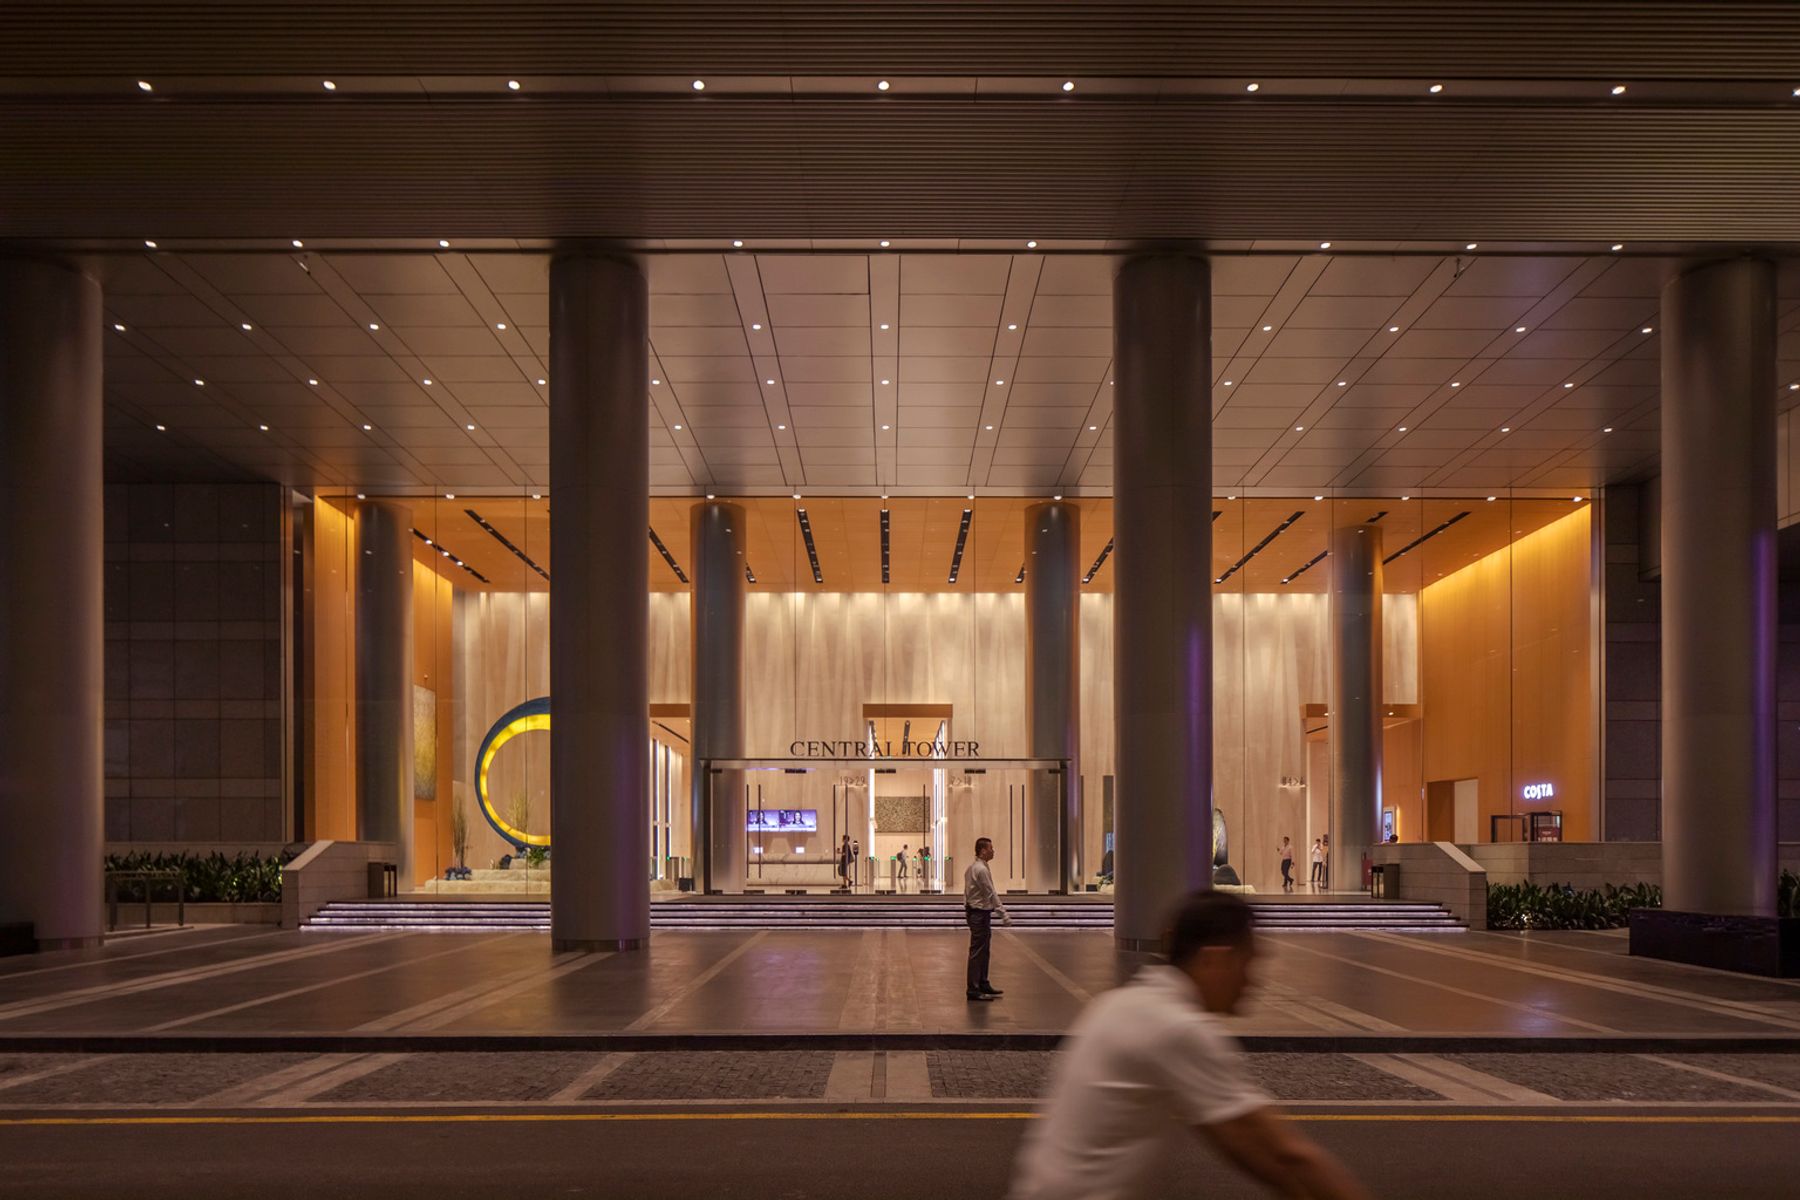 Central Tower Lobby, Guangzhou. Progettazione illuminotecnica: Isometrix Lighting Design. Fotografia: Jackie Chan, Sidney.